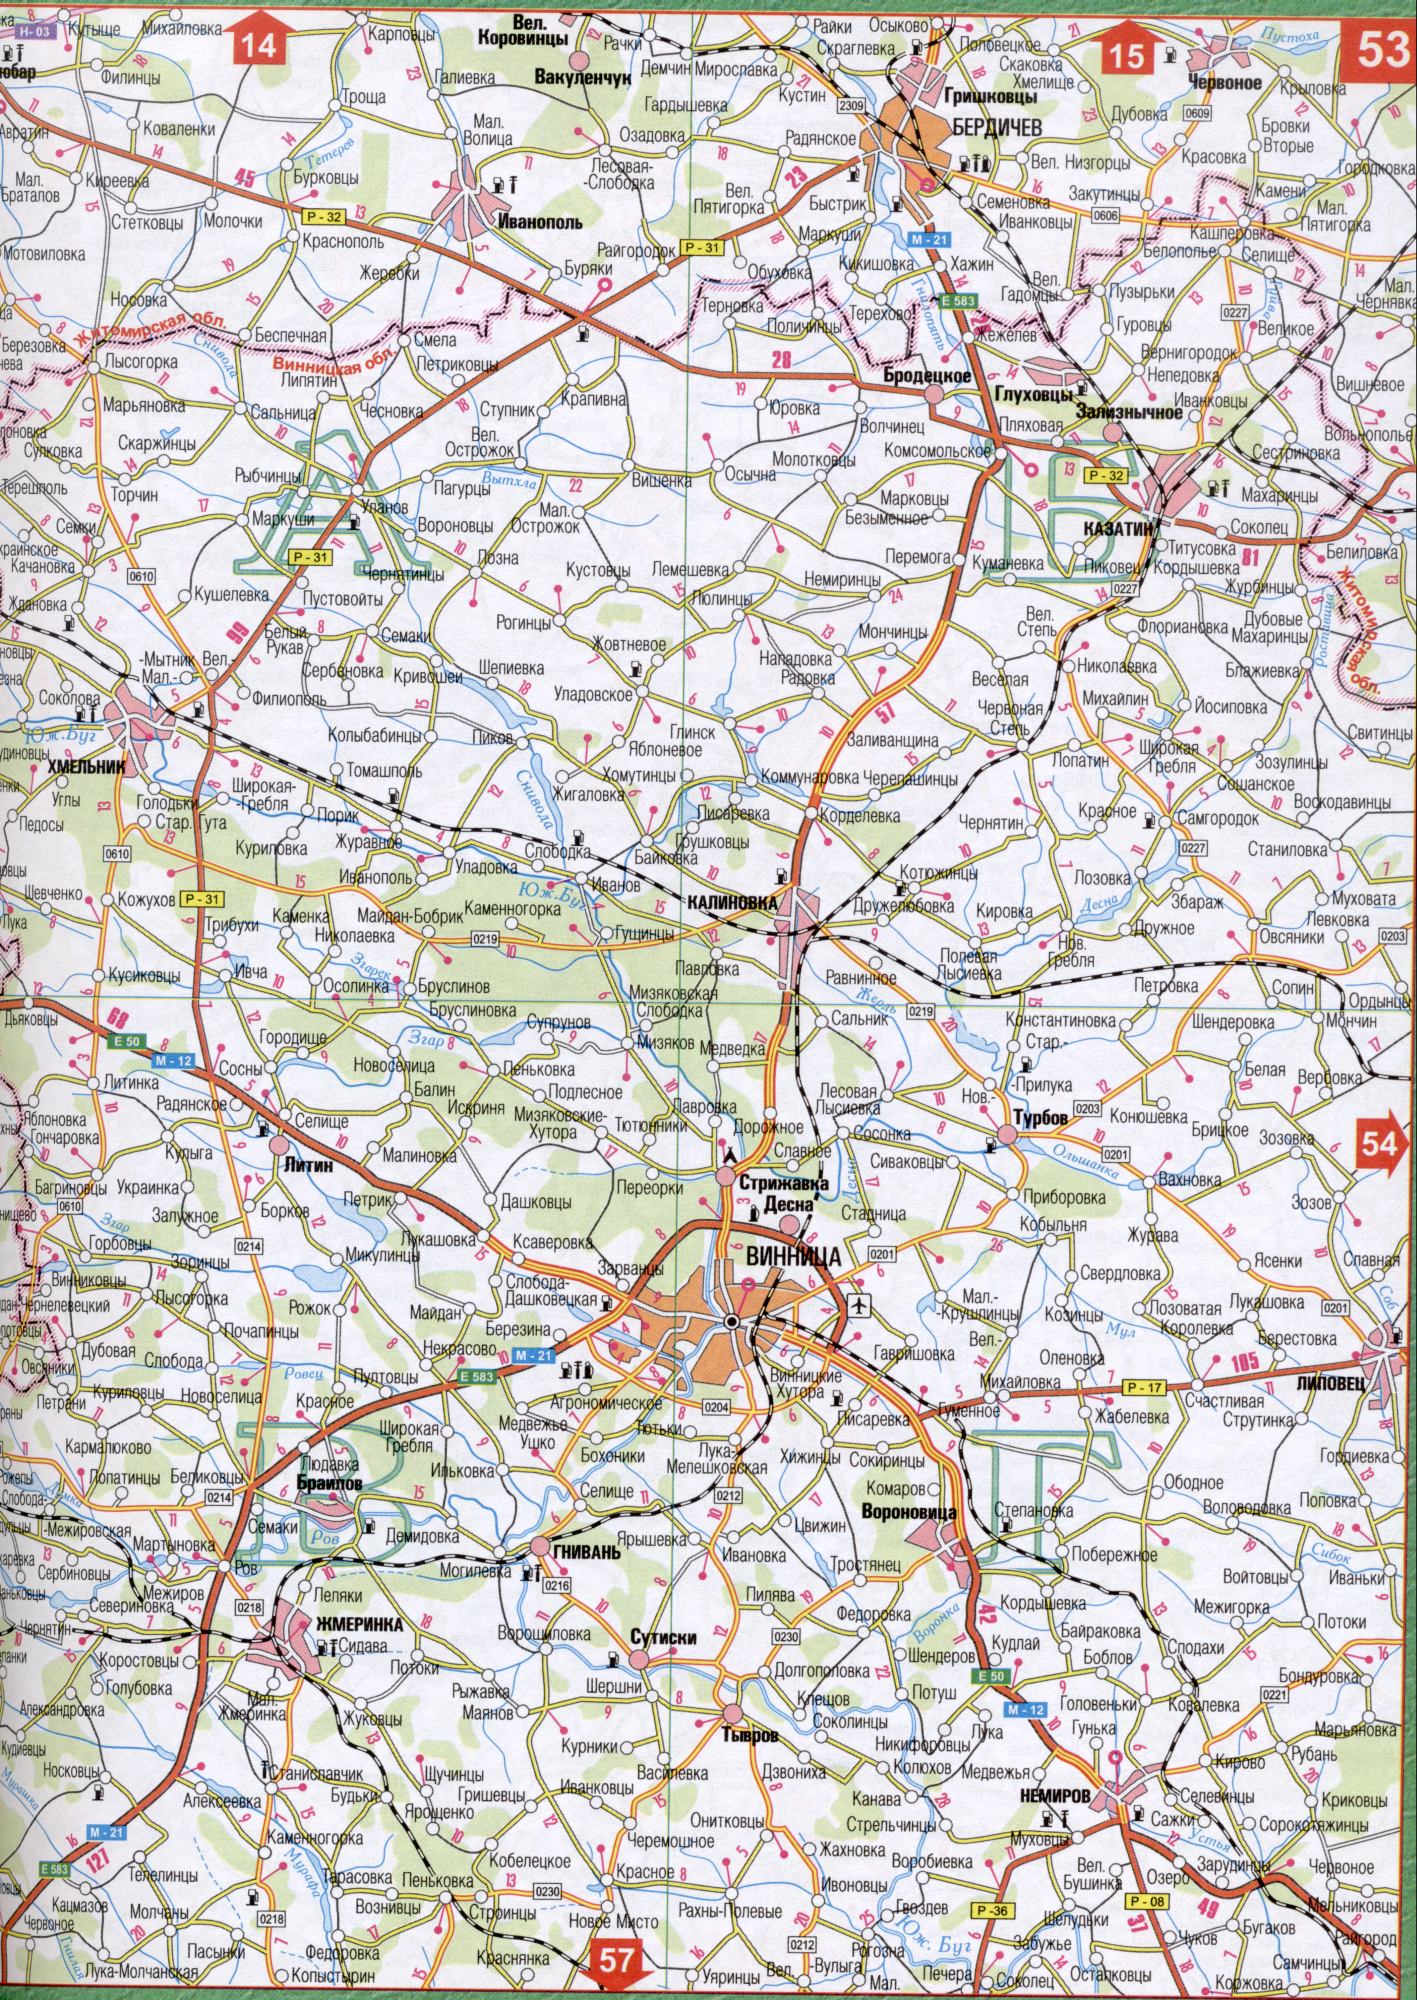 Map of Vinnitsa region of Ukraine. Detailed map of scale 1cm: 5000m Vinnytsia region. Download for free, B0 - Oak Maharintsy, Broad Boat, Bubbles, Berdichev, Tyutyunniki, Raygorod, Ivanopil